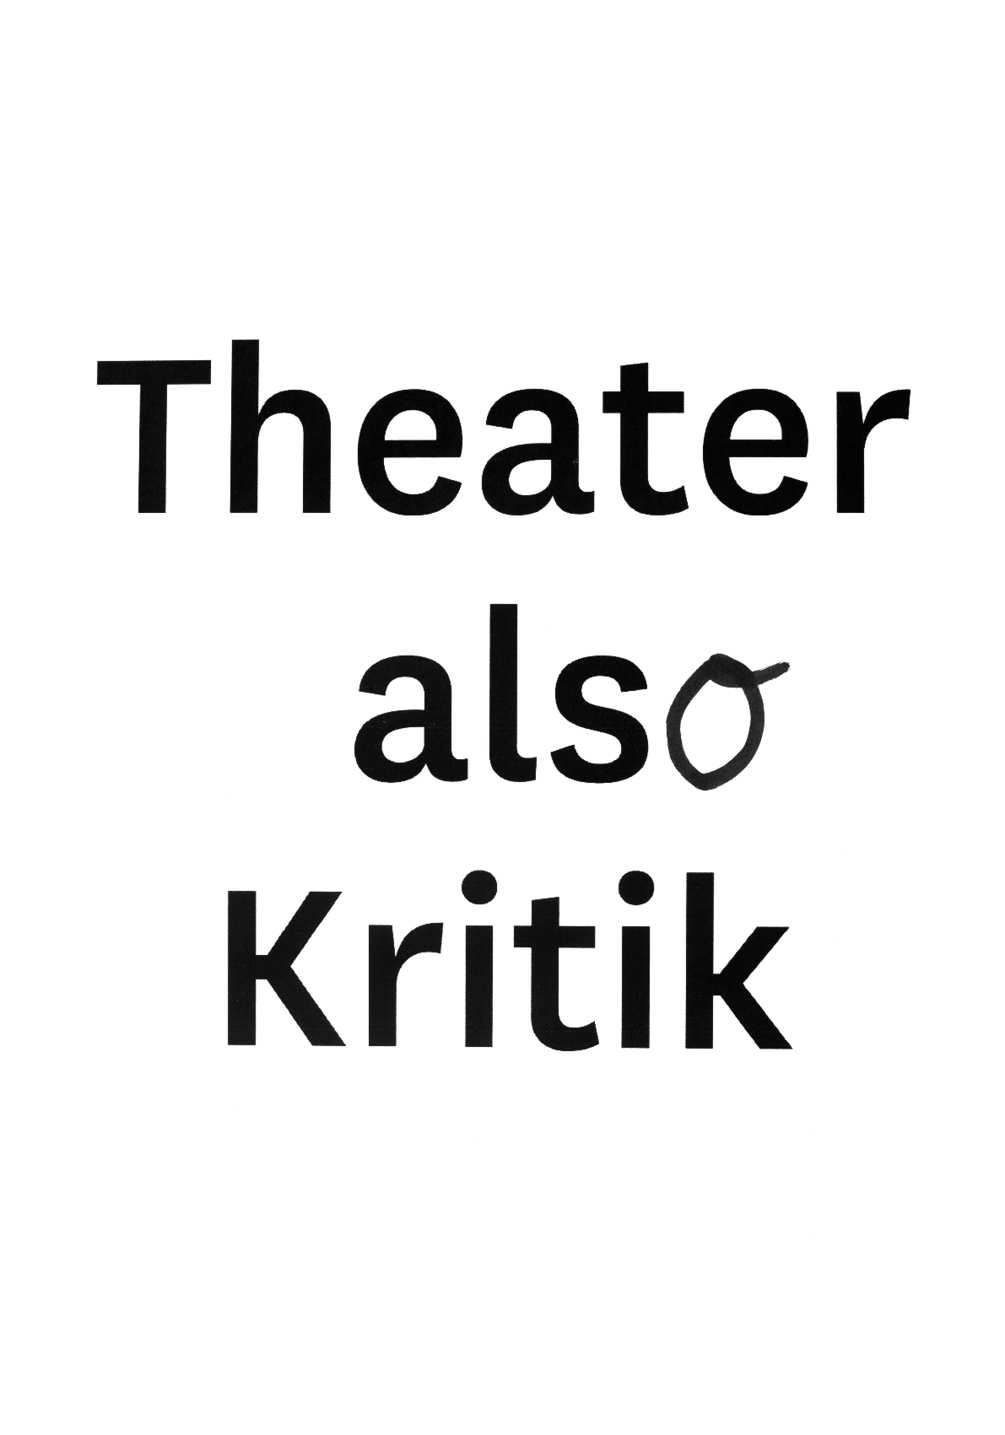 theater-as-critique-slip-10-1005x1435px